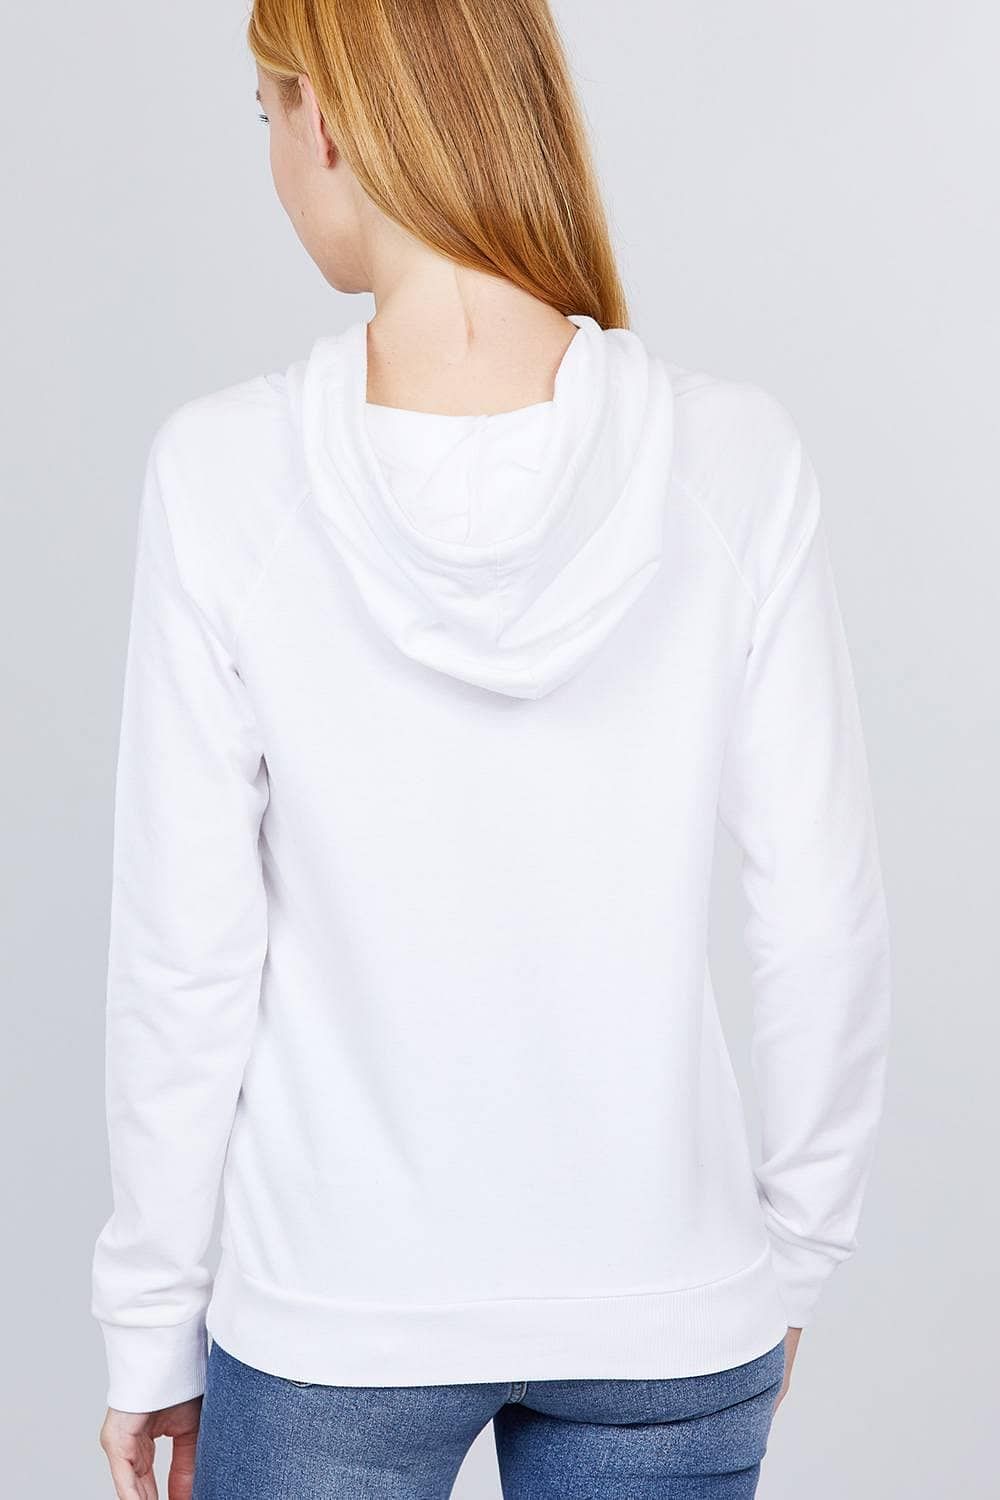 Pure White French Terry Long Sleeve Sweatshirt - Shopping Therapy Sweatshirt